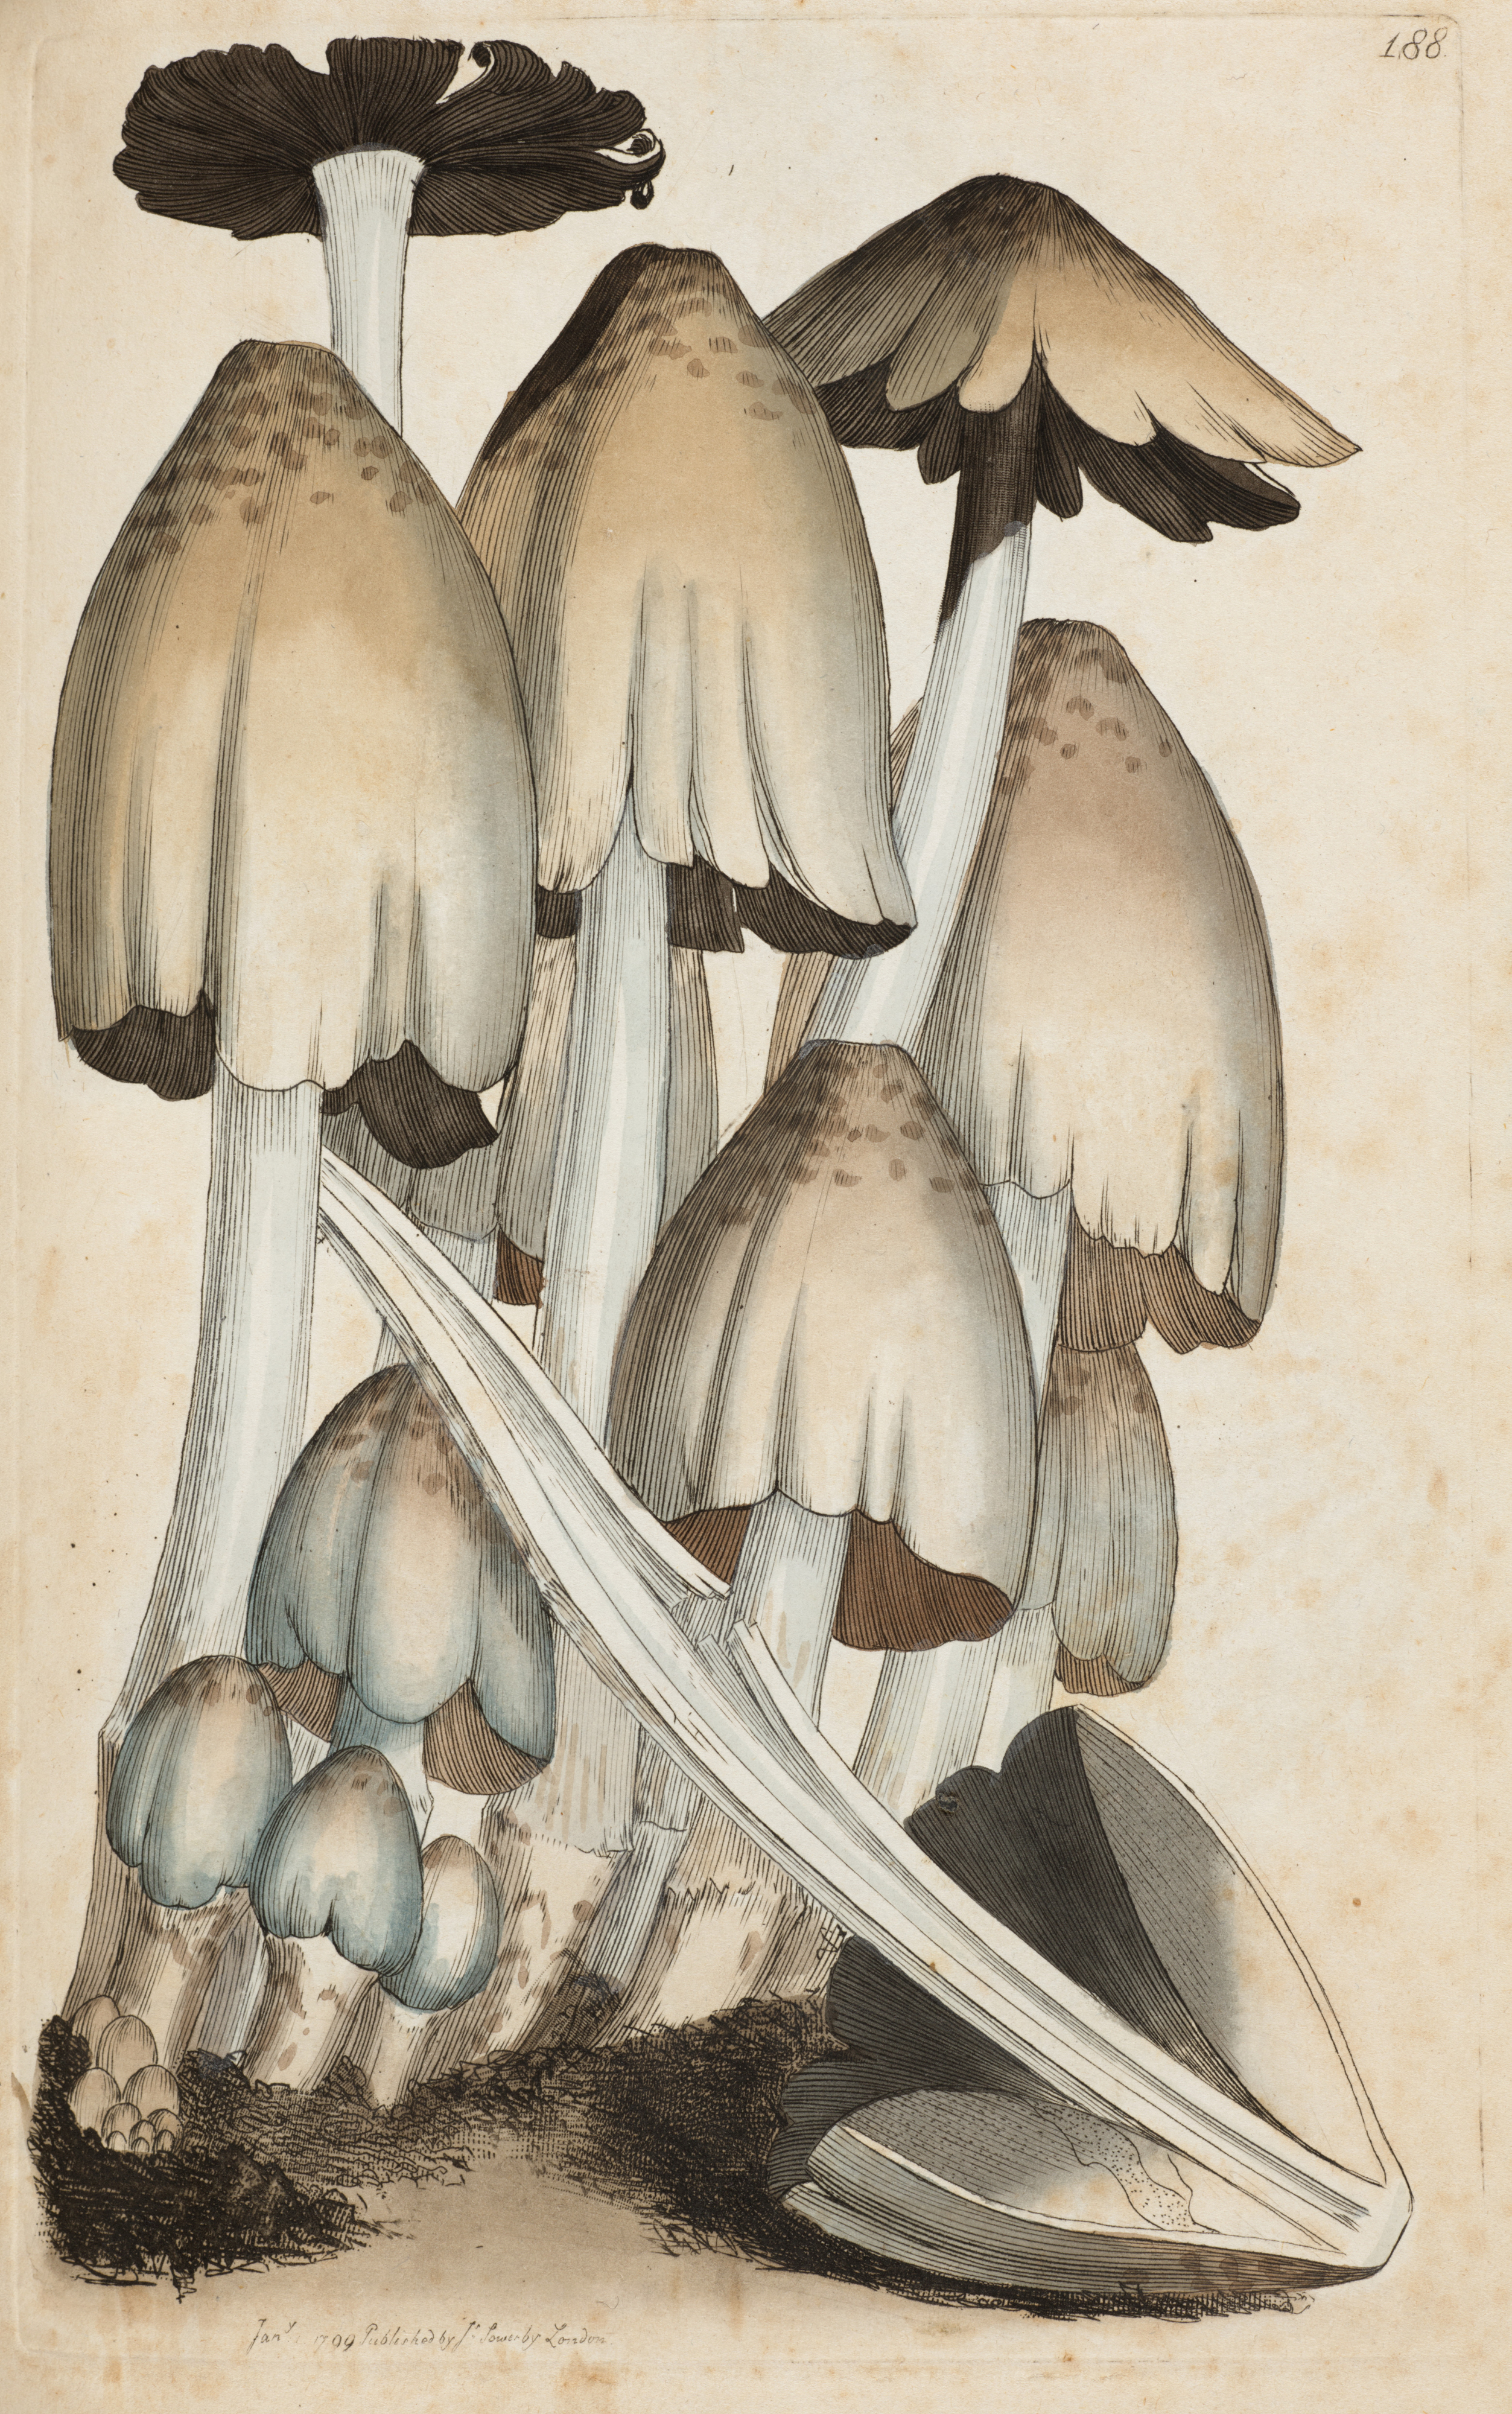 Drawing of several mushrooms